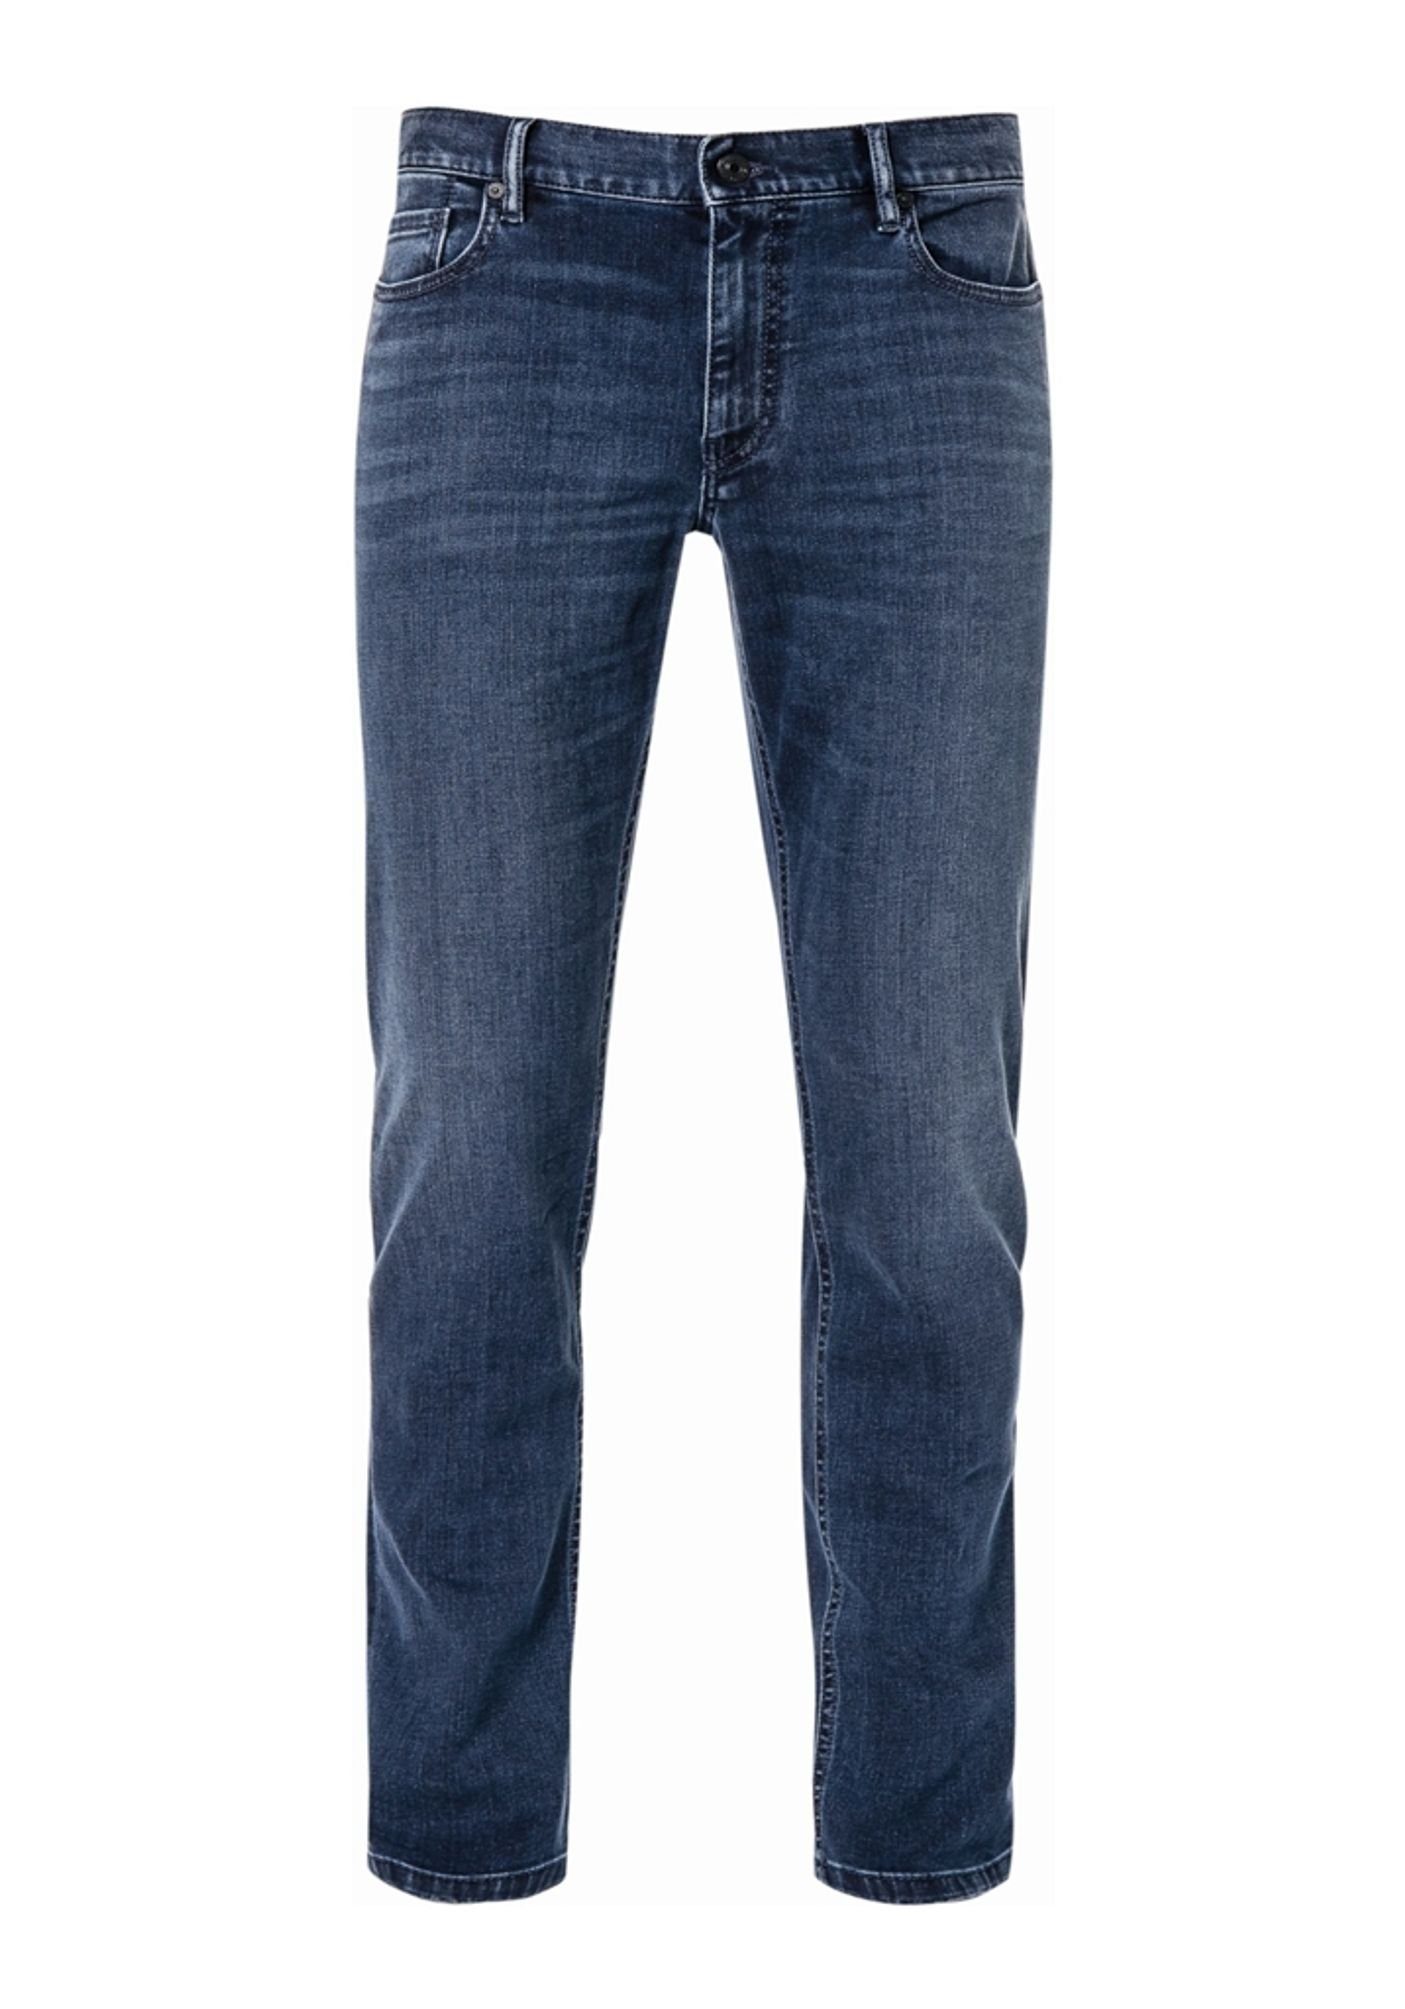 Alberto 5-Pocket-Jeans 1572 4237 kompakt Navy (898)